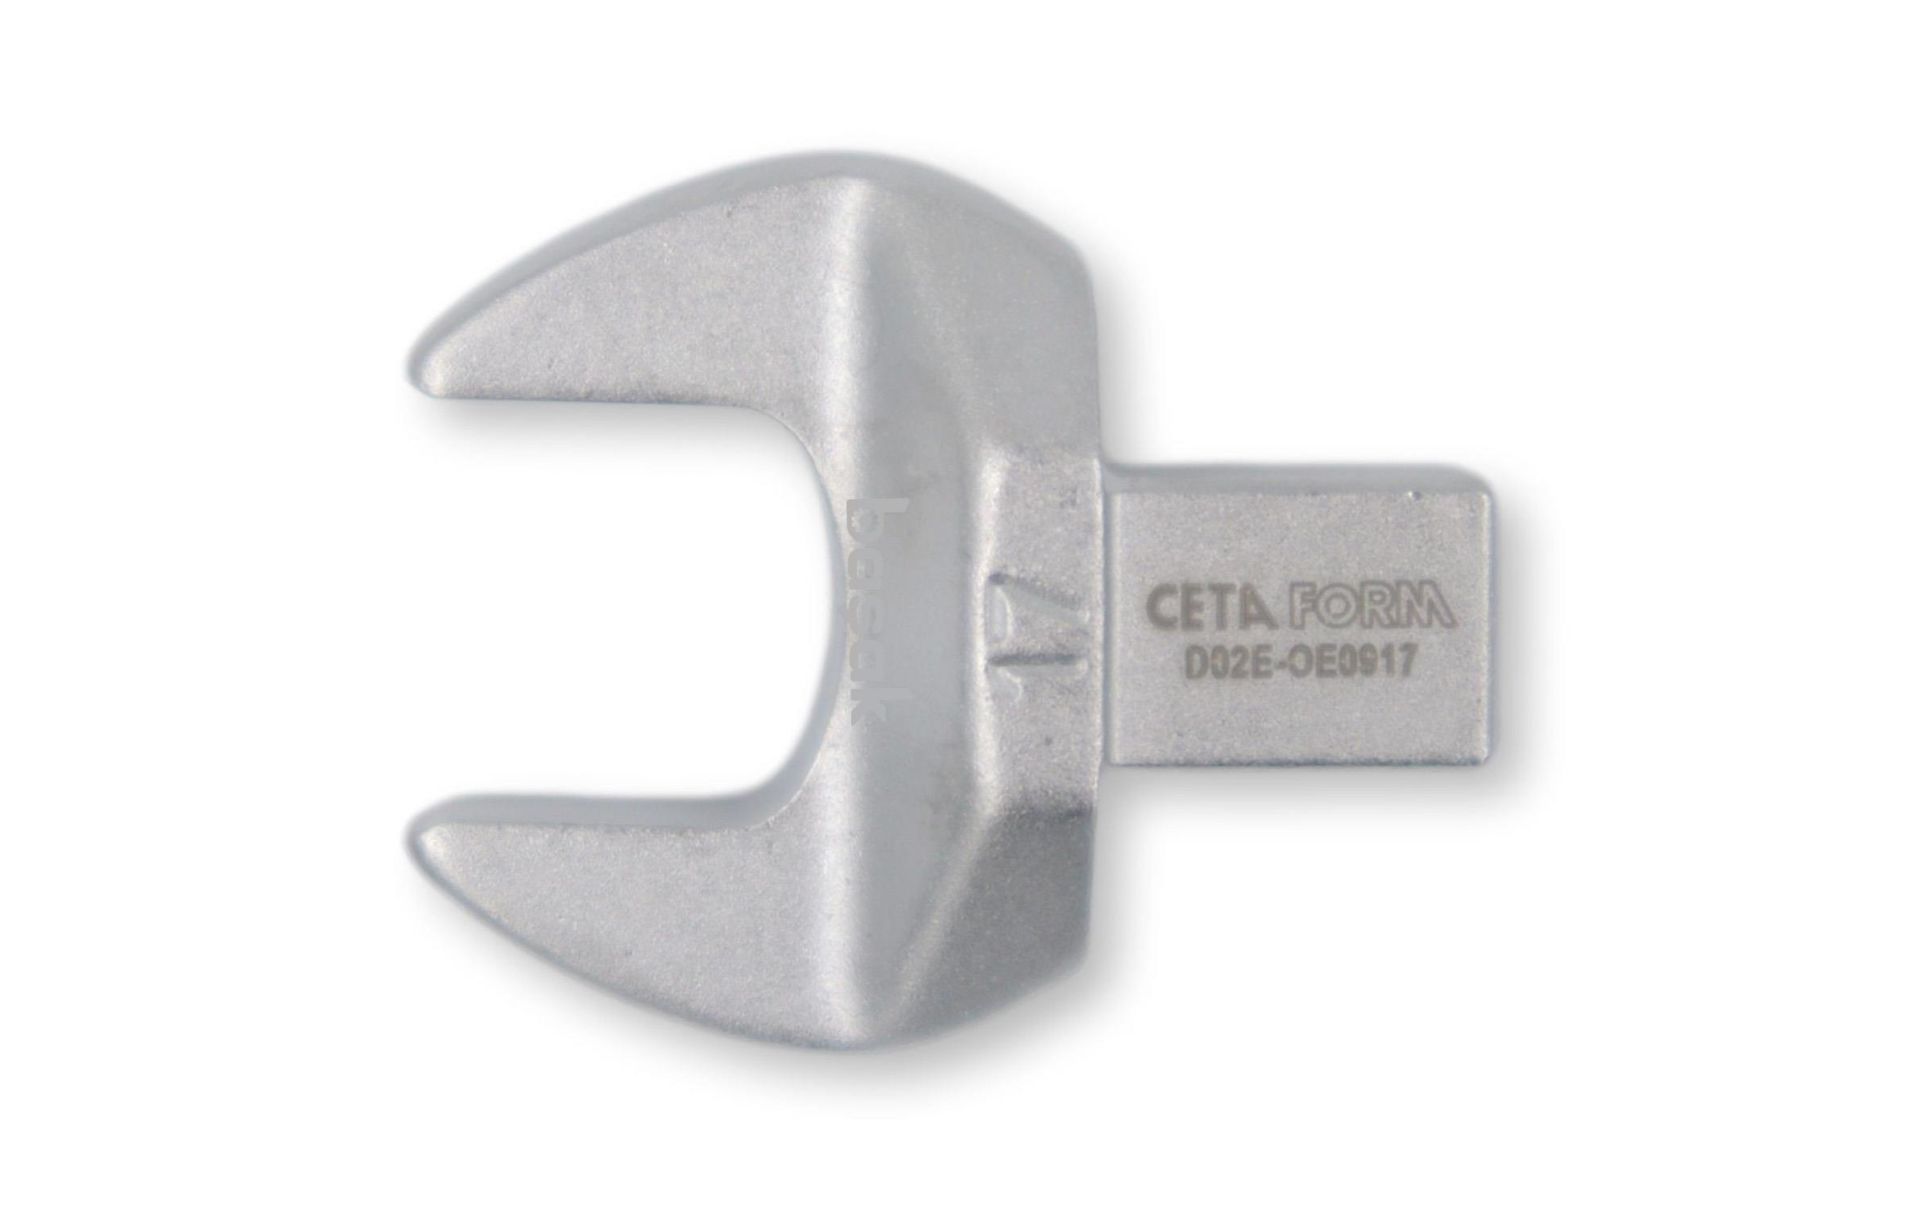 Ceta Form 17mm Açık Ağız Tork Anahtar Ucu (9x12mm) D02E-OE0917